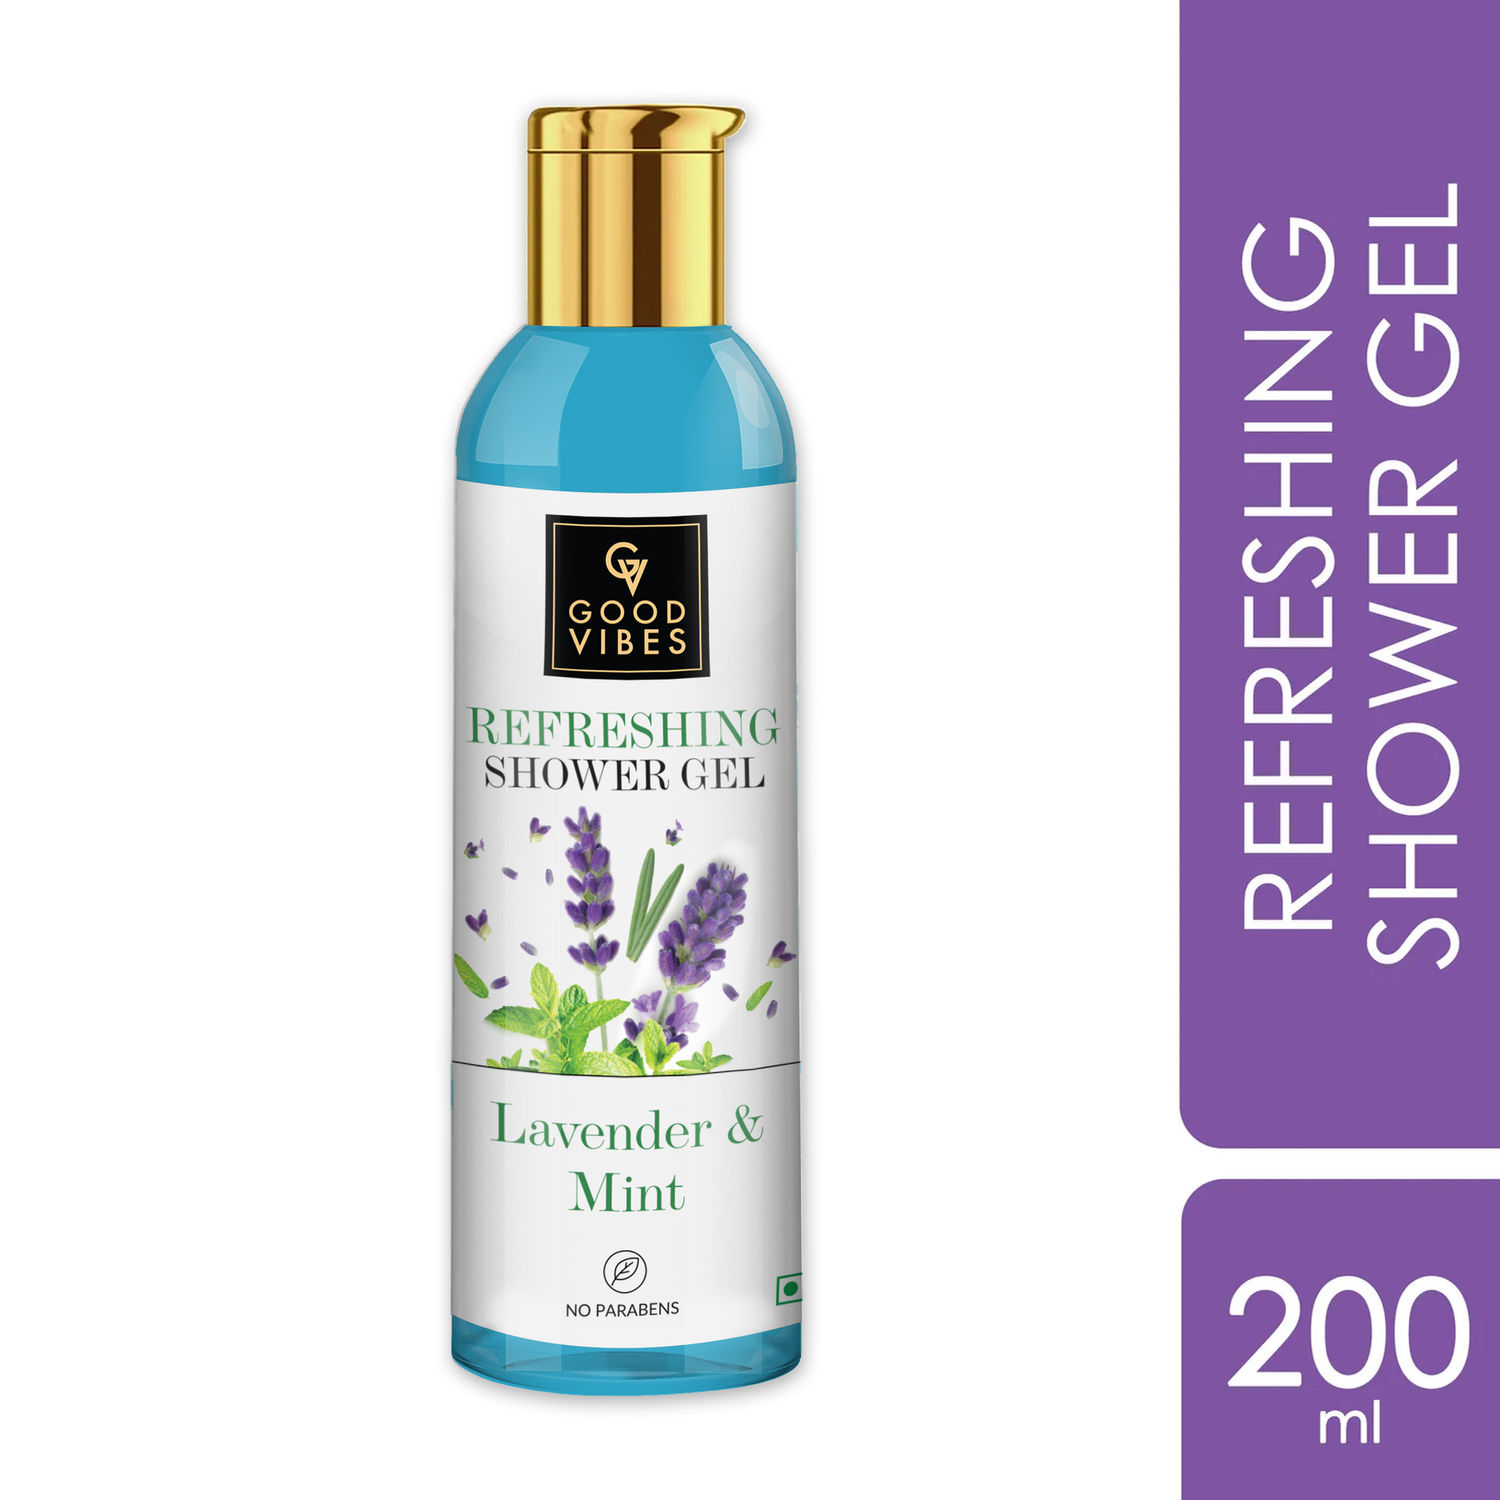 Buy Good Vibes Lavender & Mint Refreshing Shower Gel | Refreshing, Soothing, Calming | No Parabens, No Animal Testing (200 ml) - Purplle